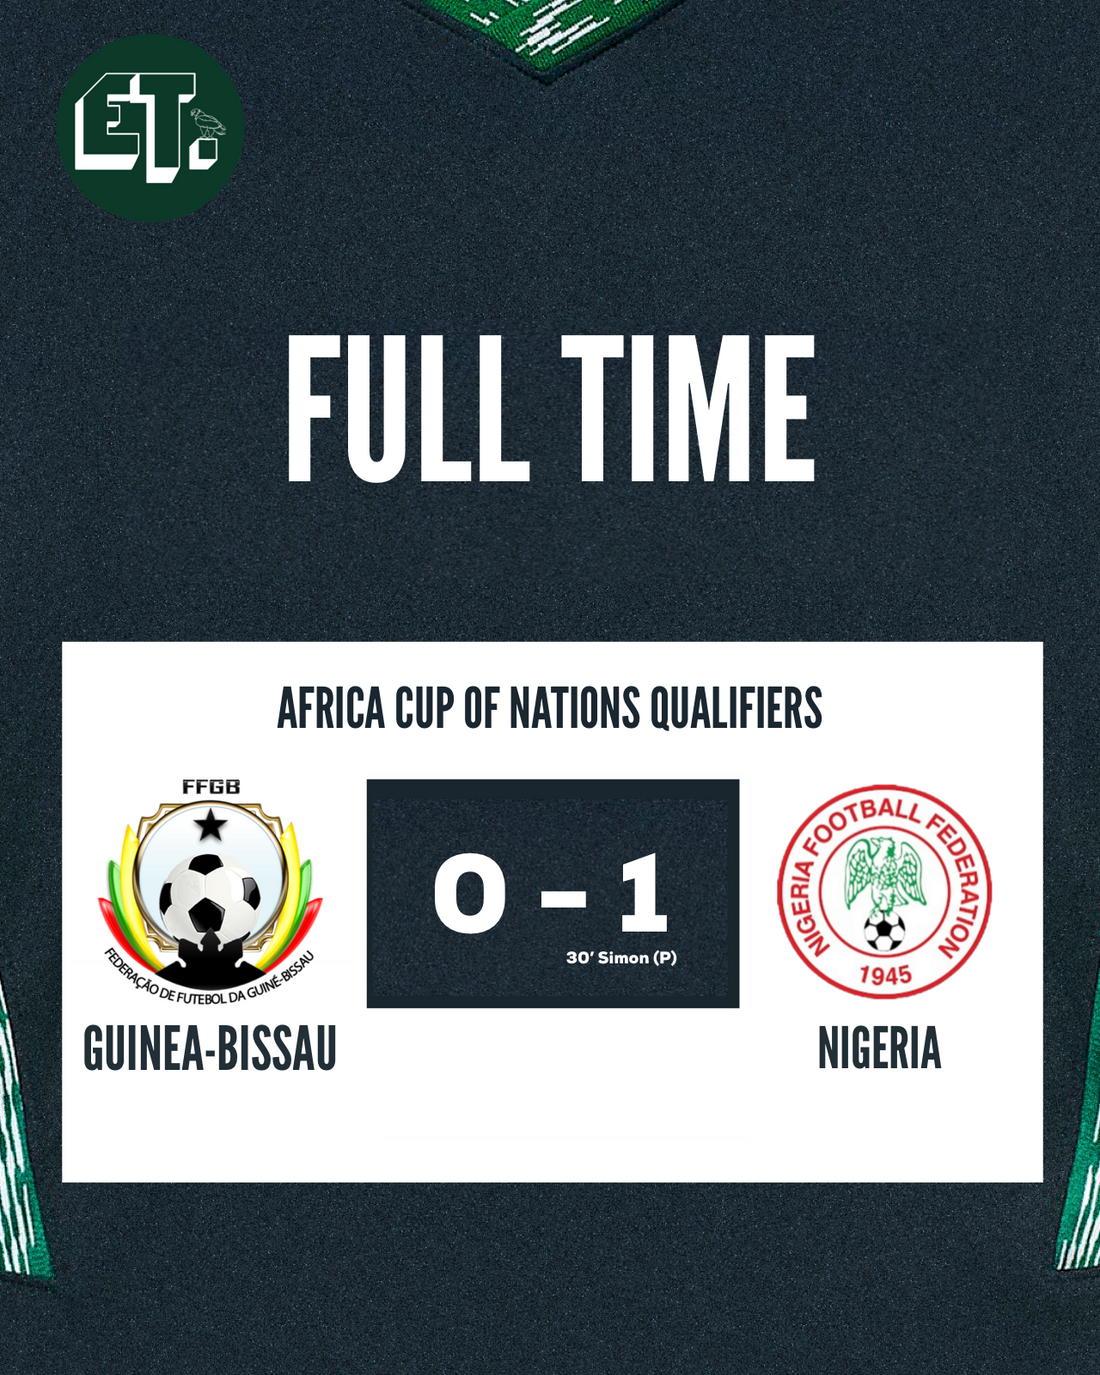 Nigeria's Super Eagles claim revenge with 1-0 victory over Guinea-Bissau